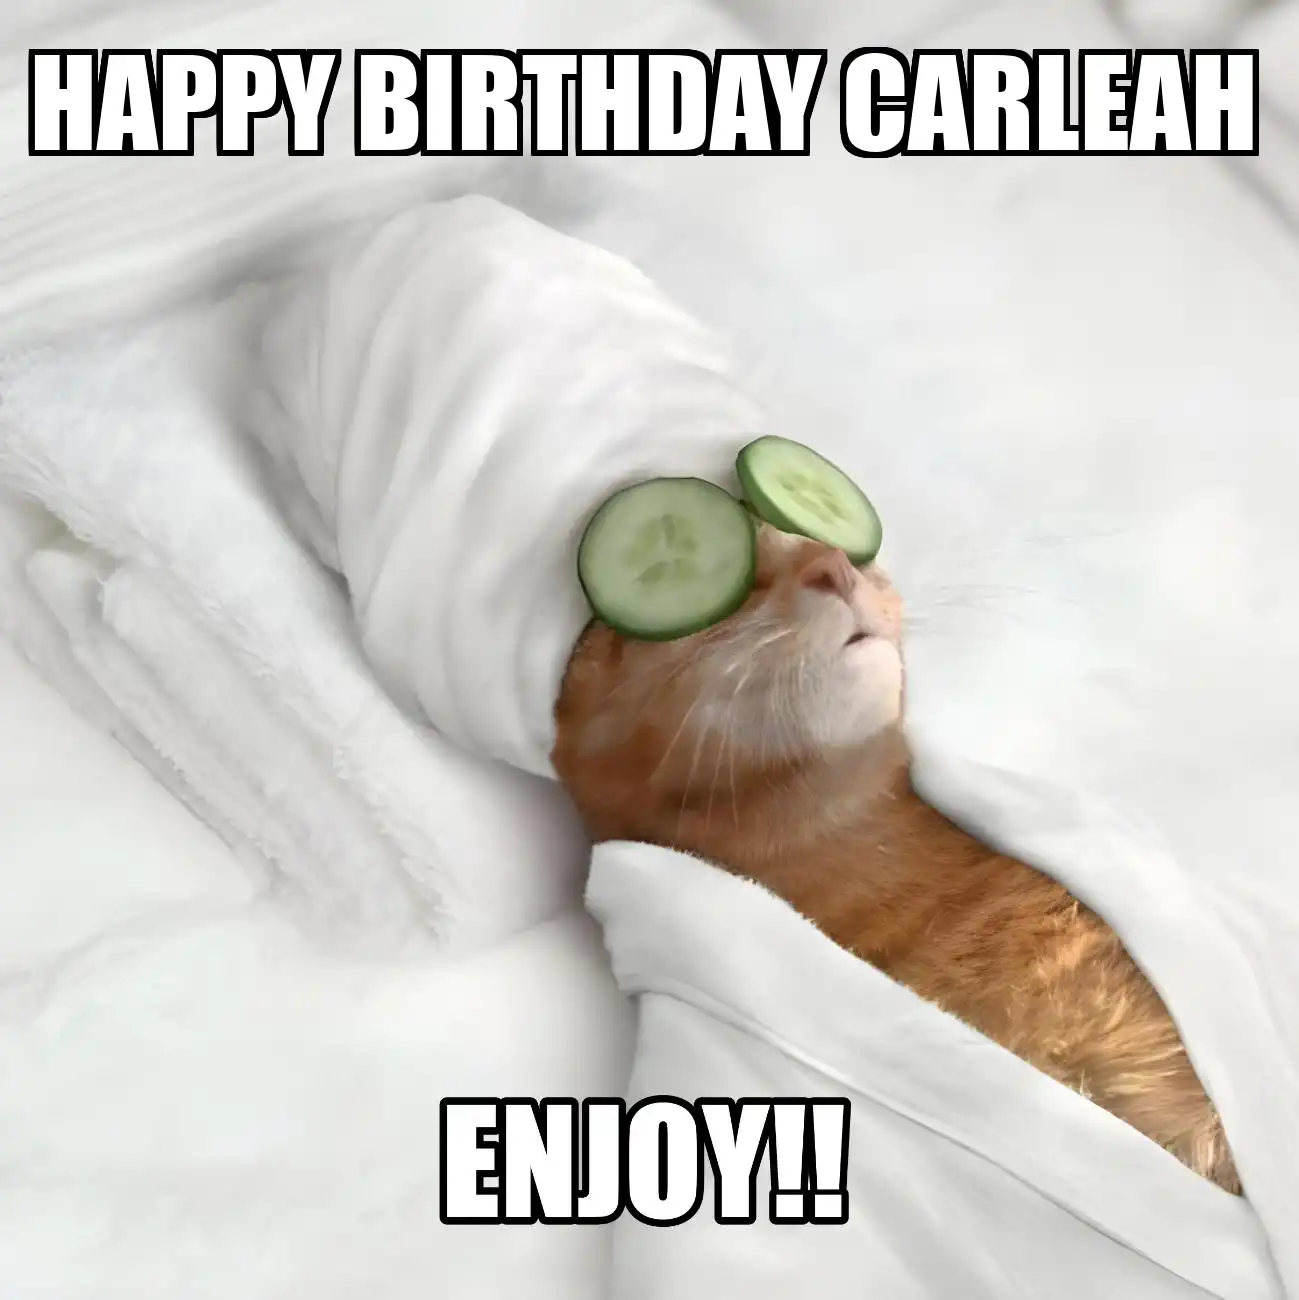 Happy Birthday Carleah Enjoy Cat Meme